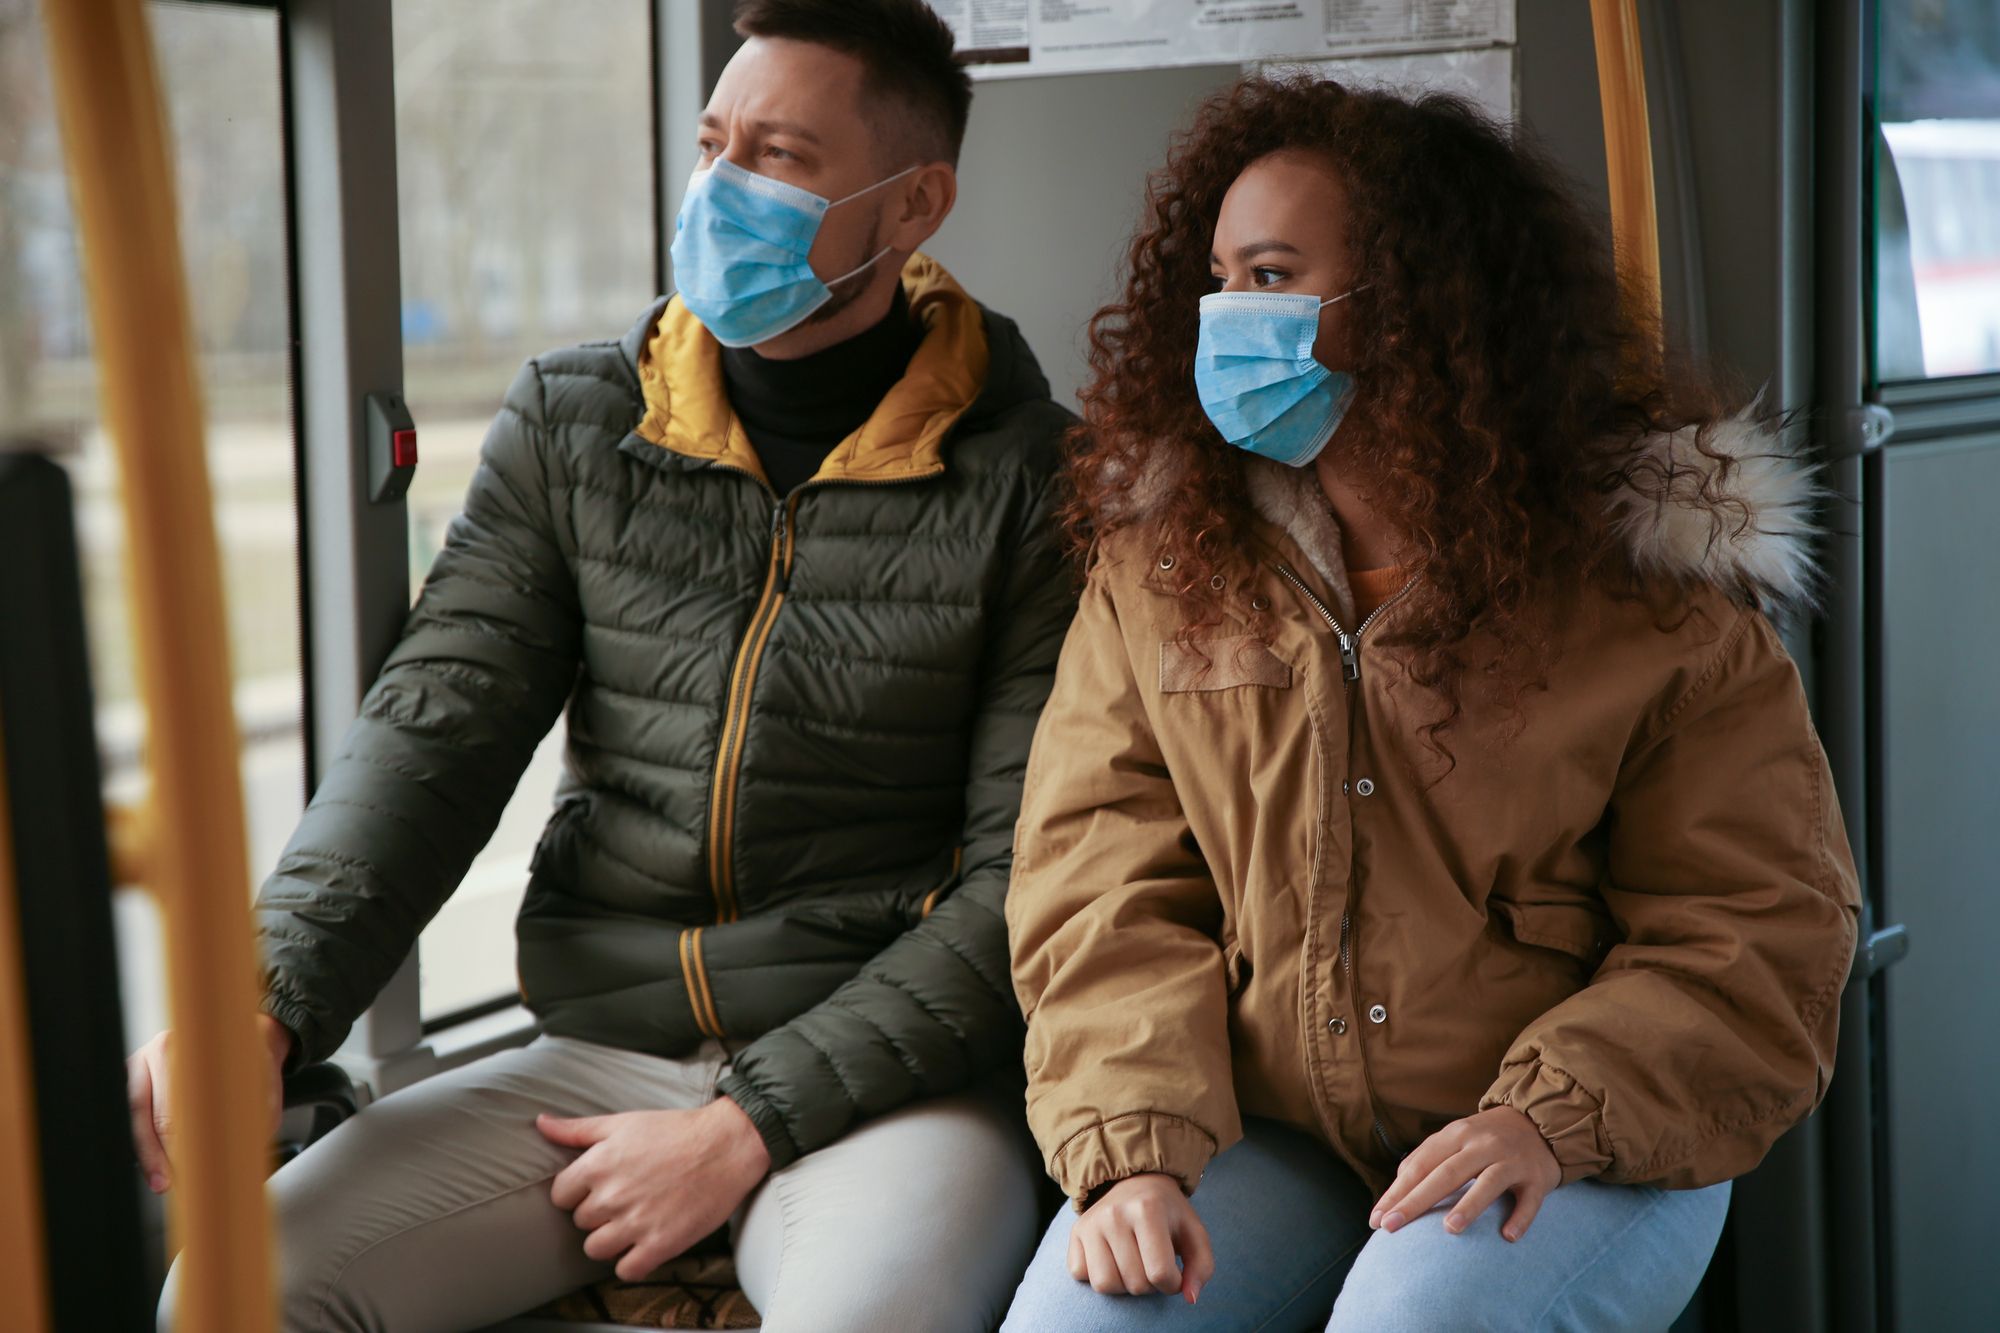 couple wearing masks due to the coronavirus outbreak